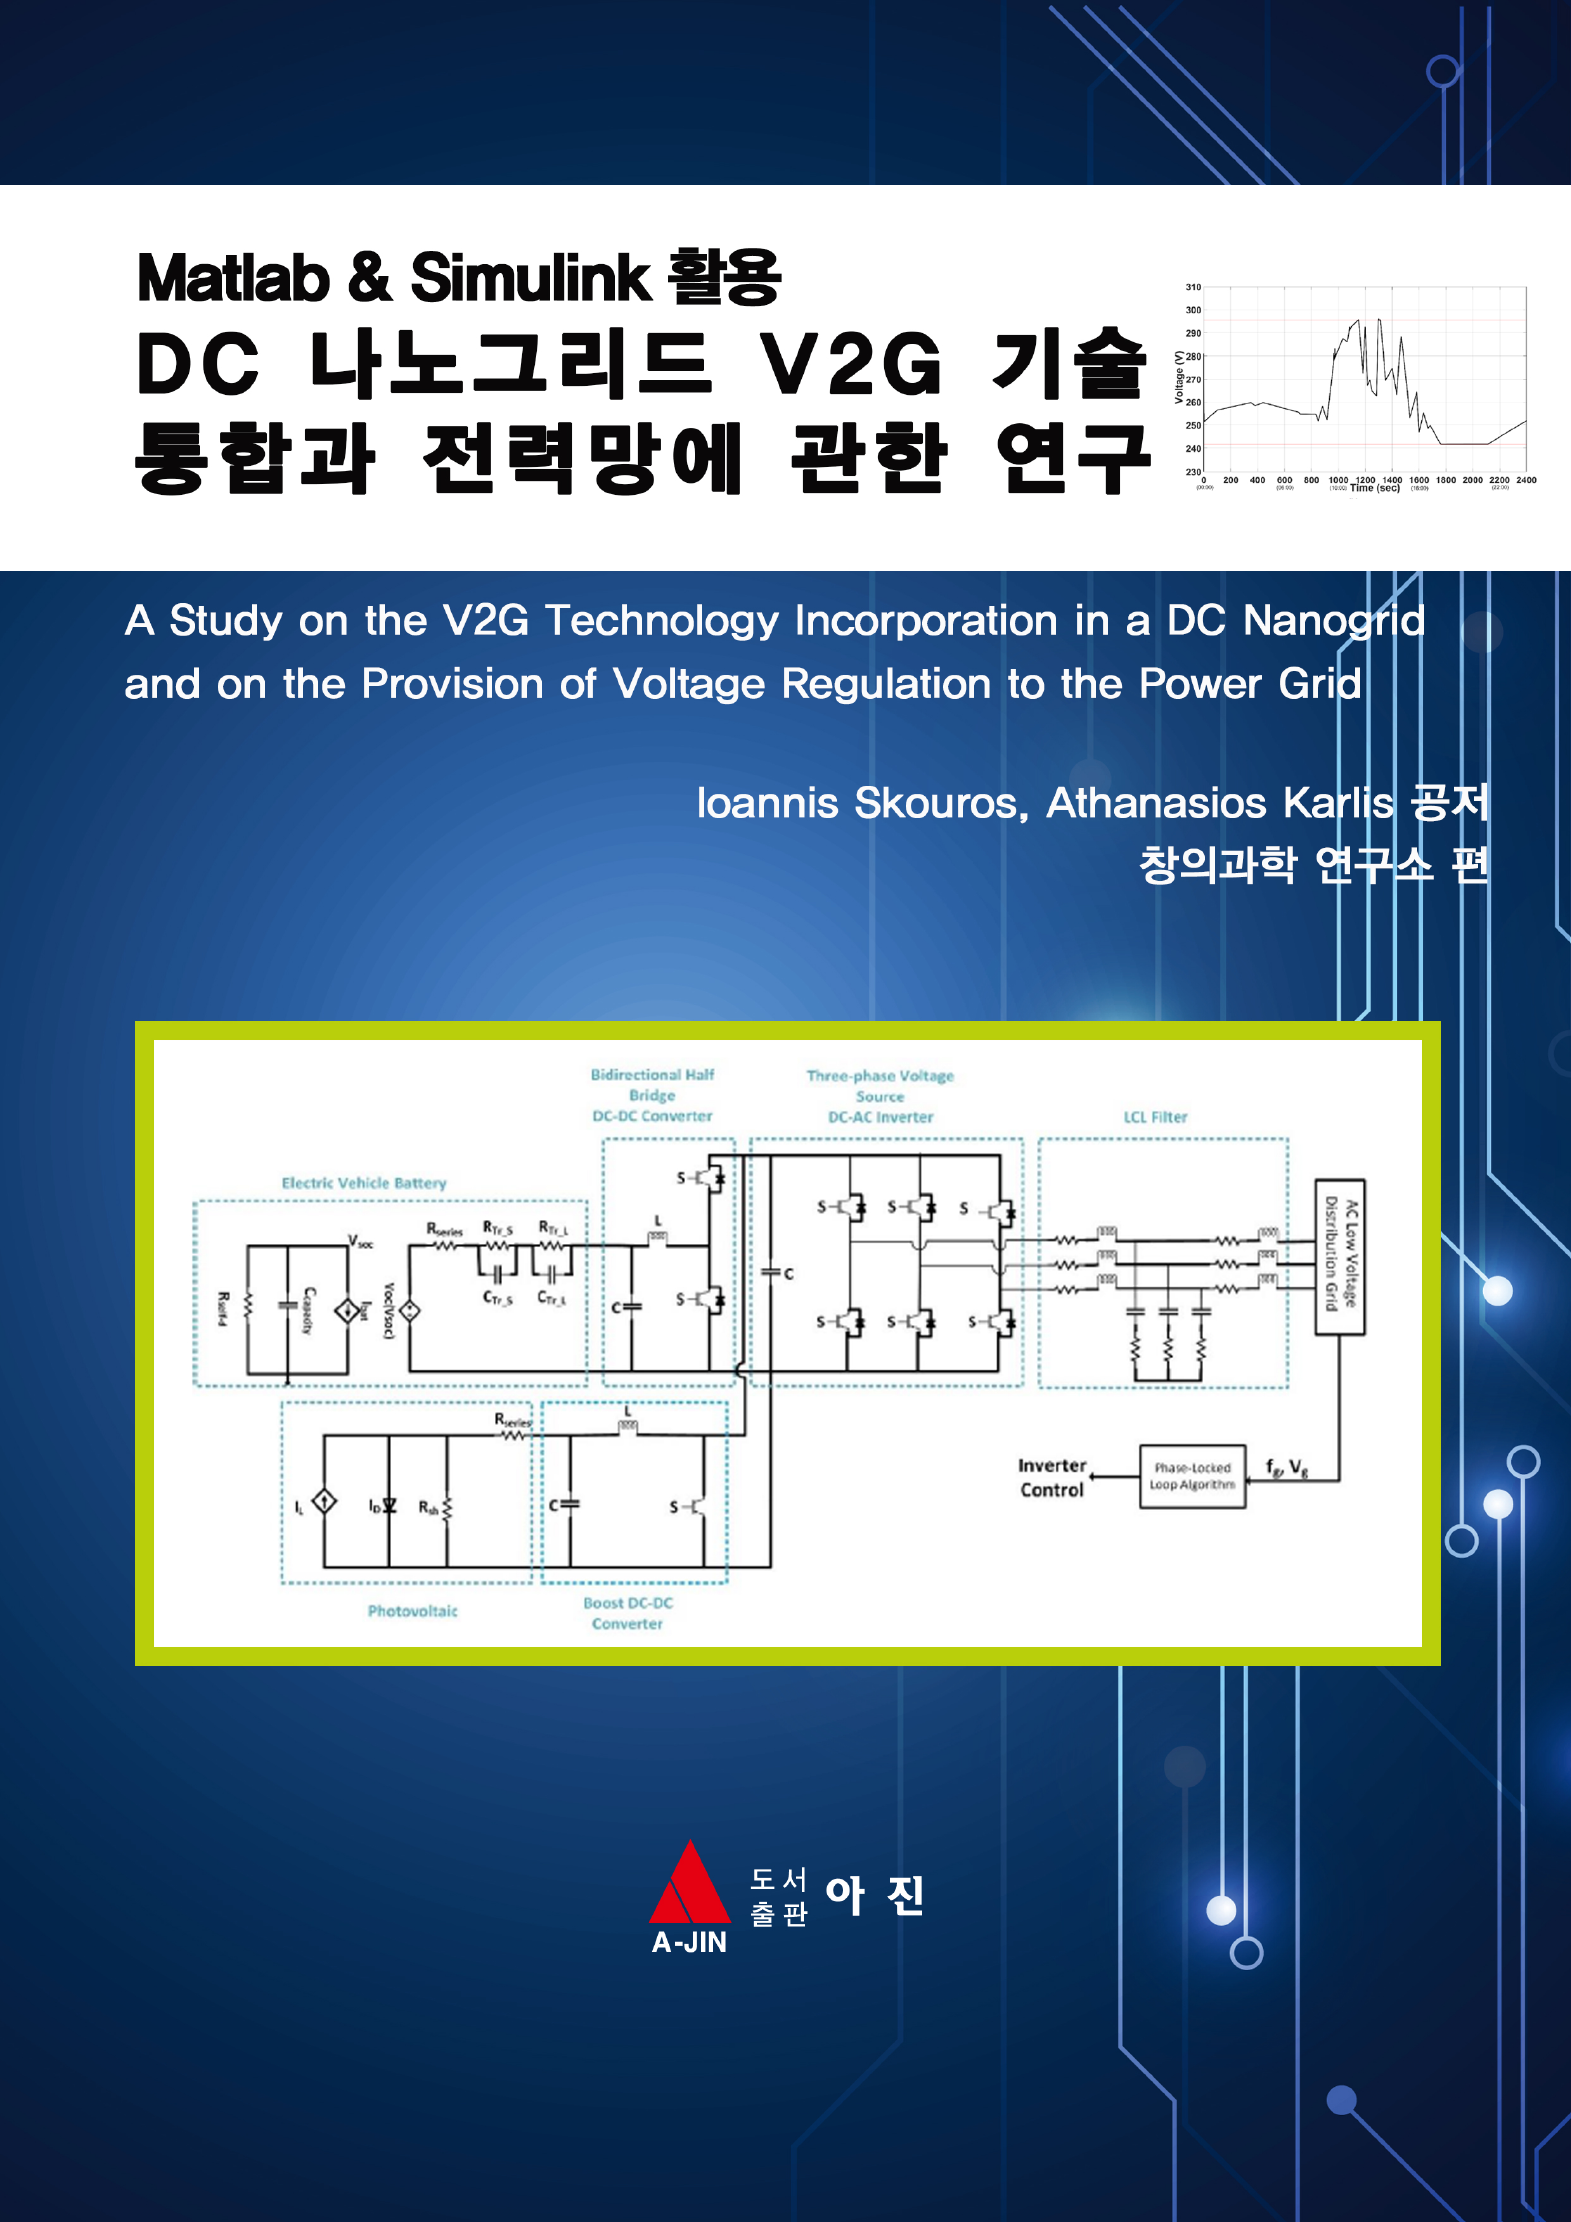 Matlab & Simulink 활용 DC 나노그리드 V2G 기술 통합과 전력망에 관한 연구